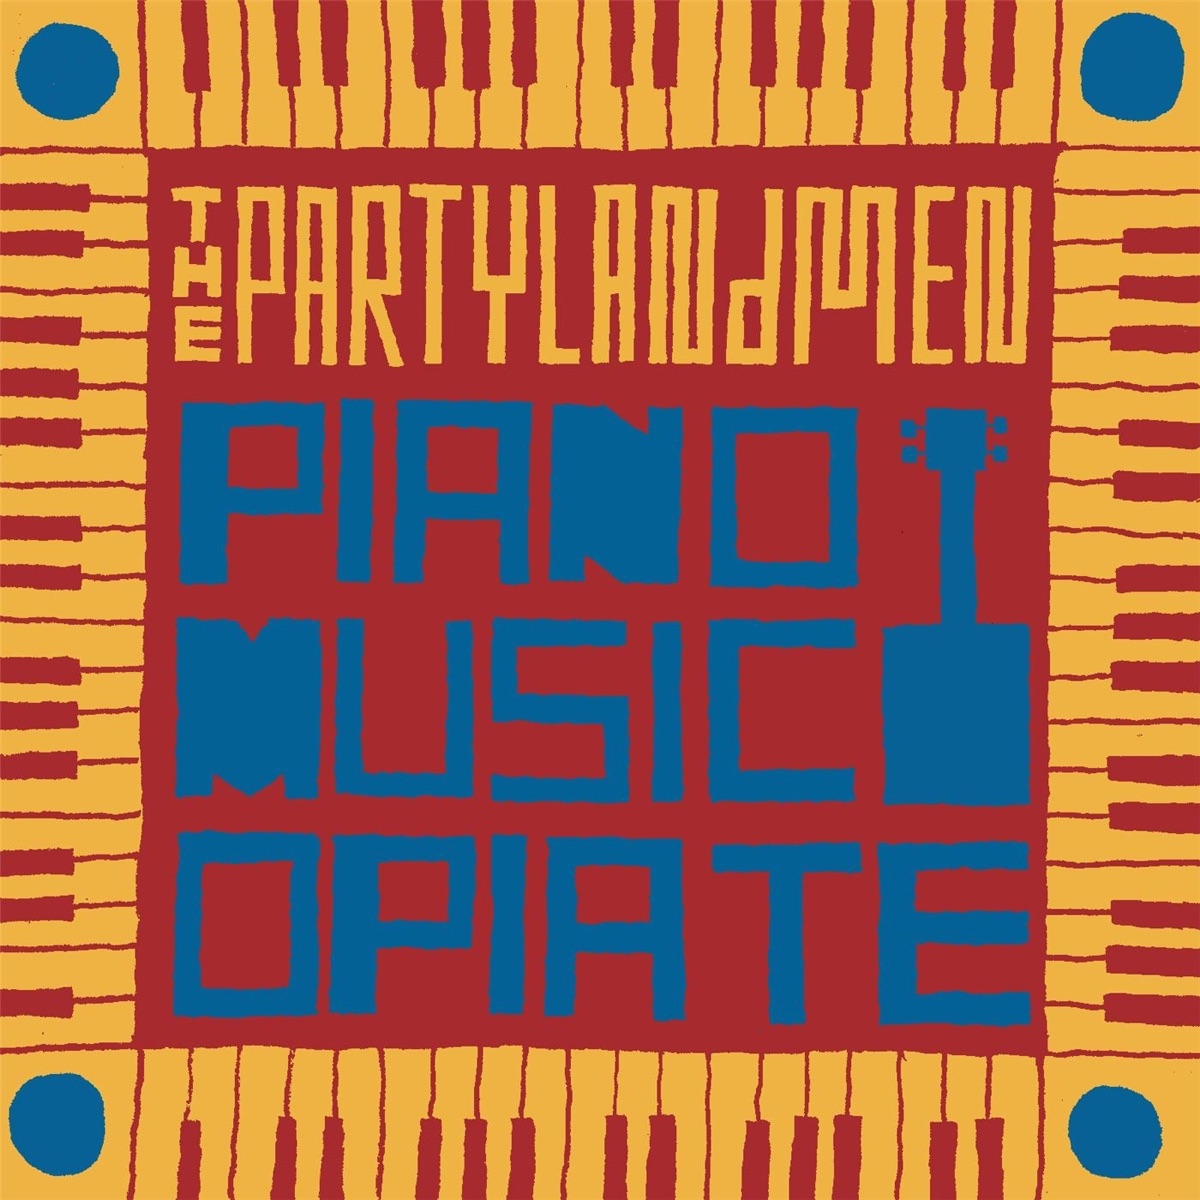 Piano Music Opiate - Album by The Partylandmen - Apple Music